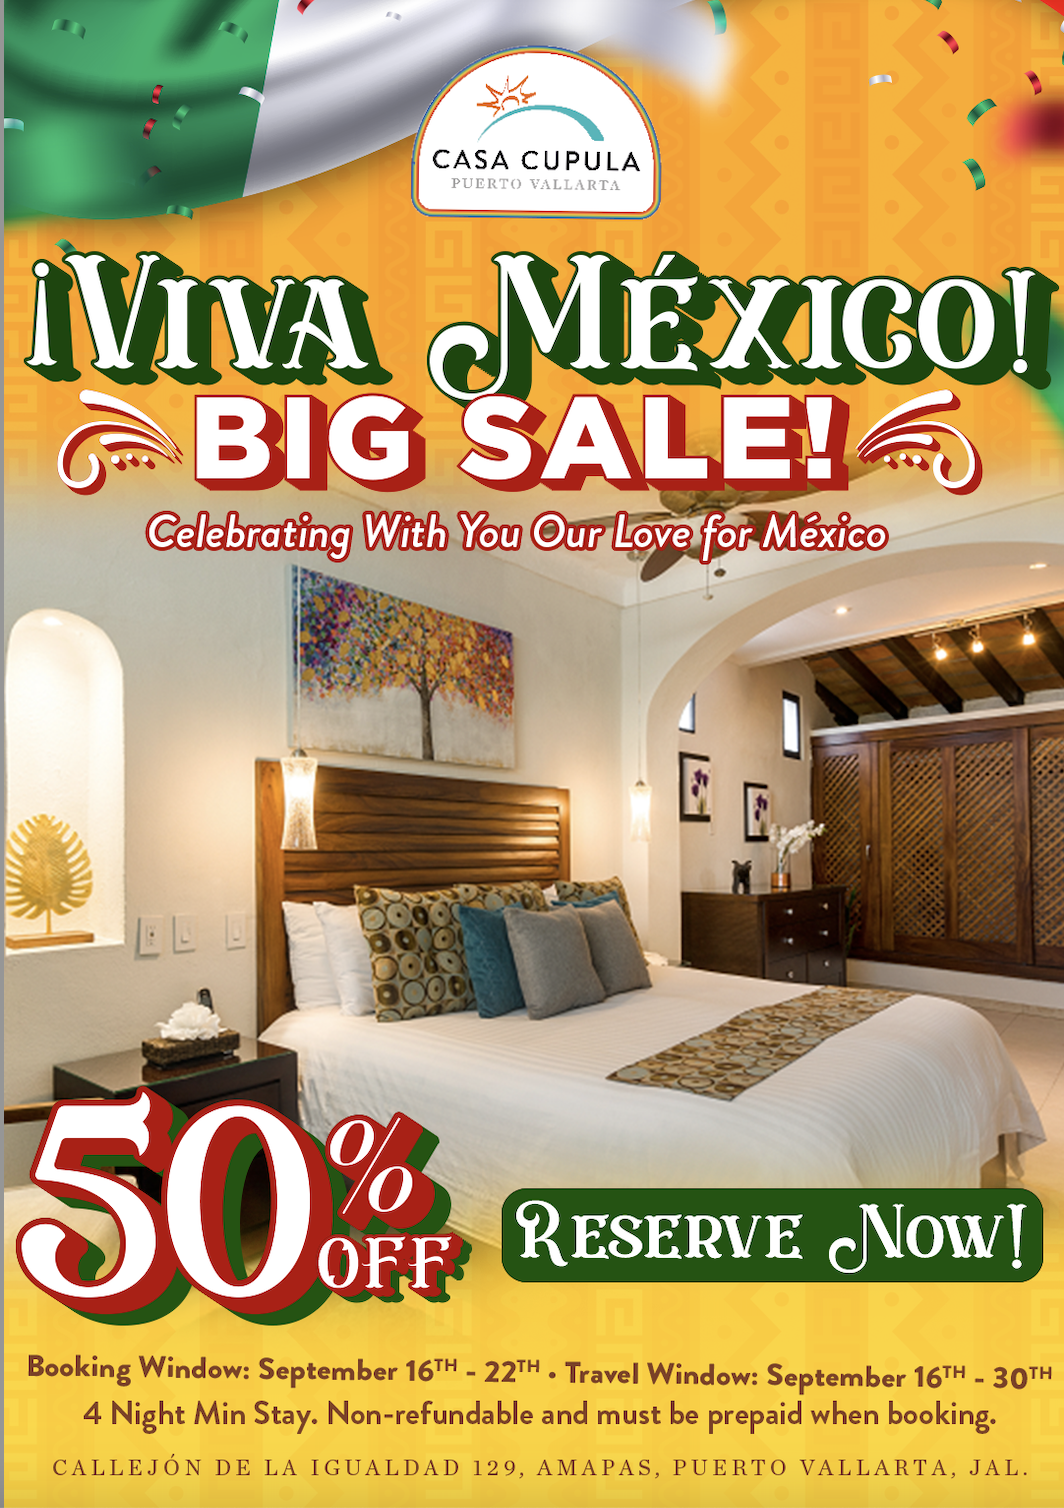 ¡Viva México! Big Sale